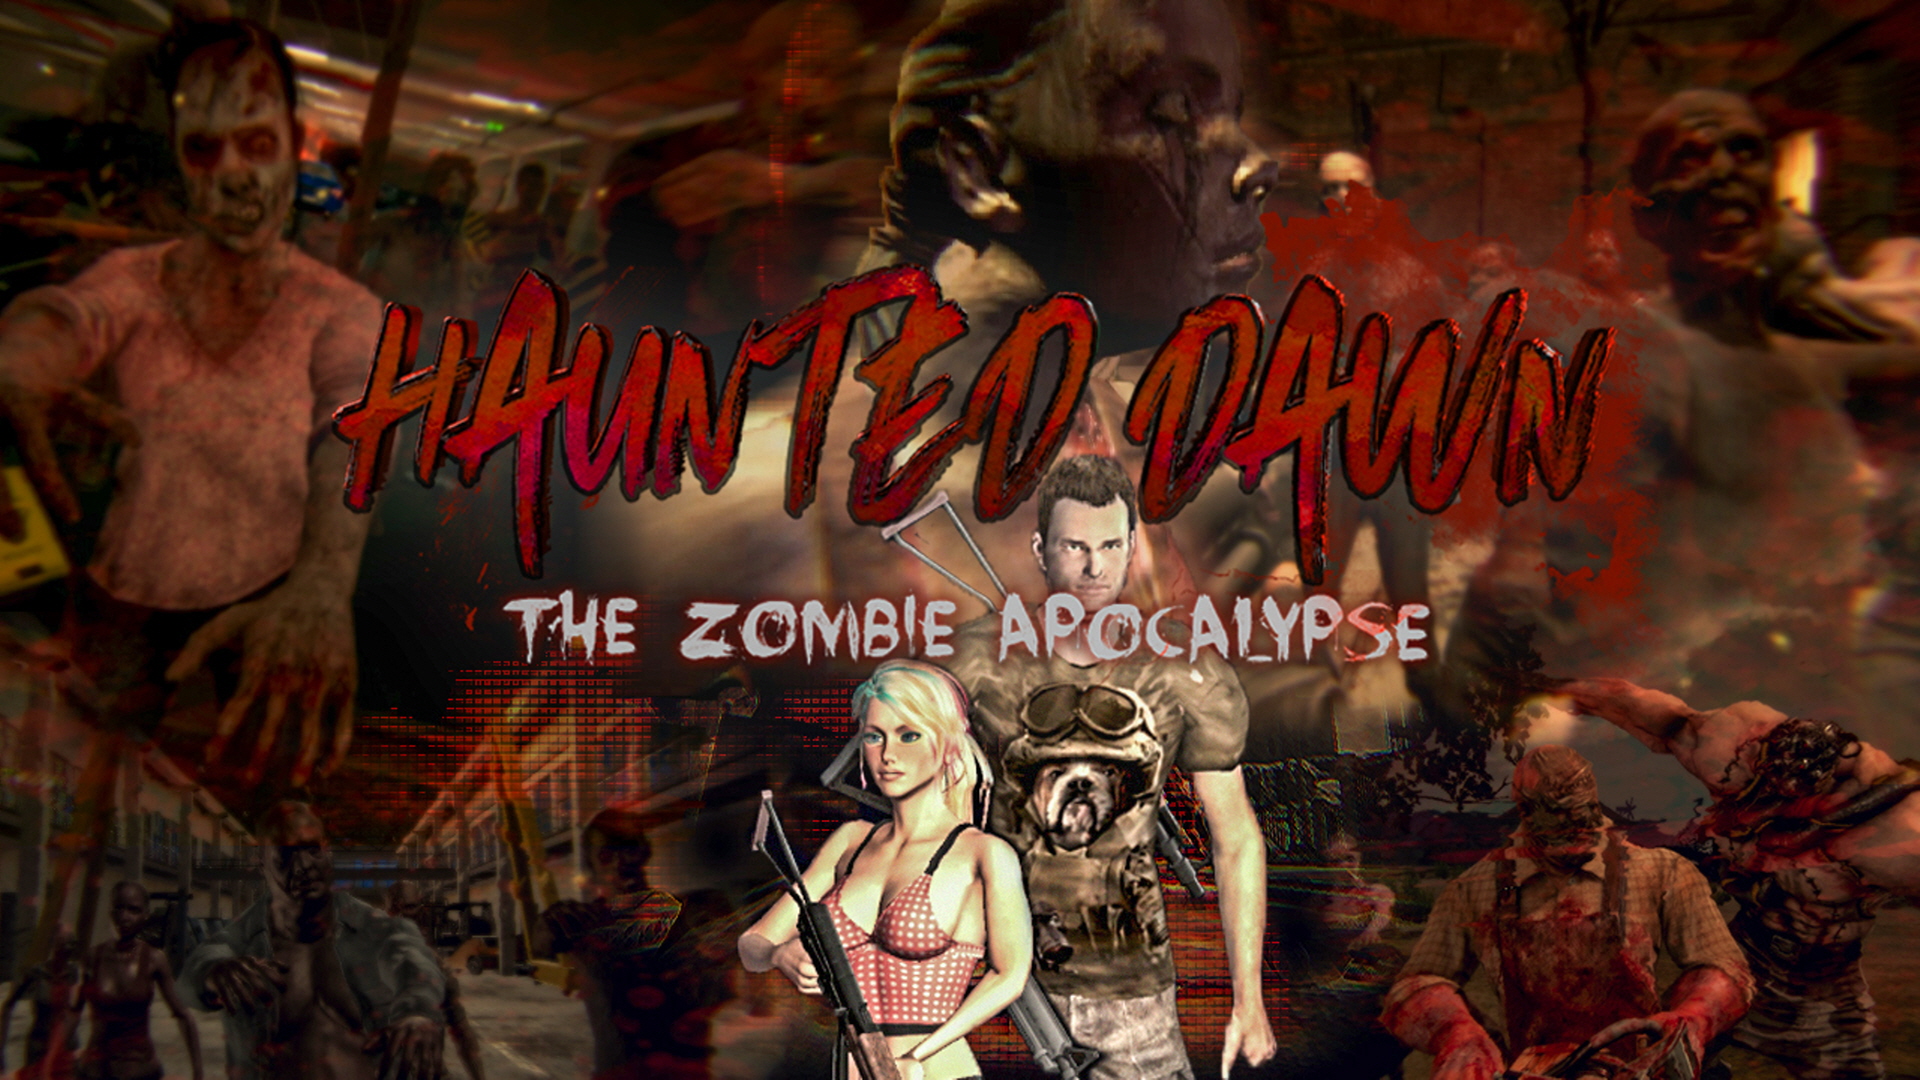 Haunted Dawn: The Zombie Apocalypse